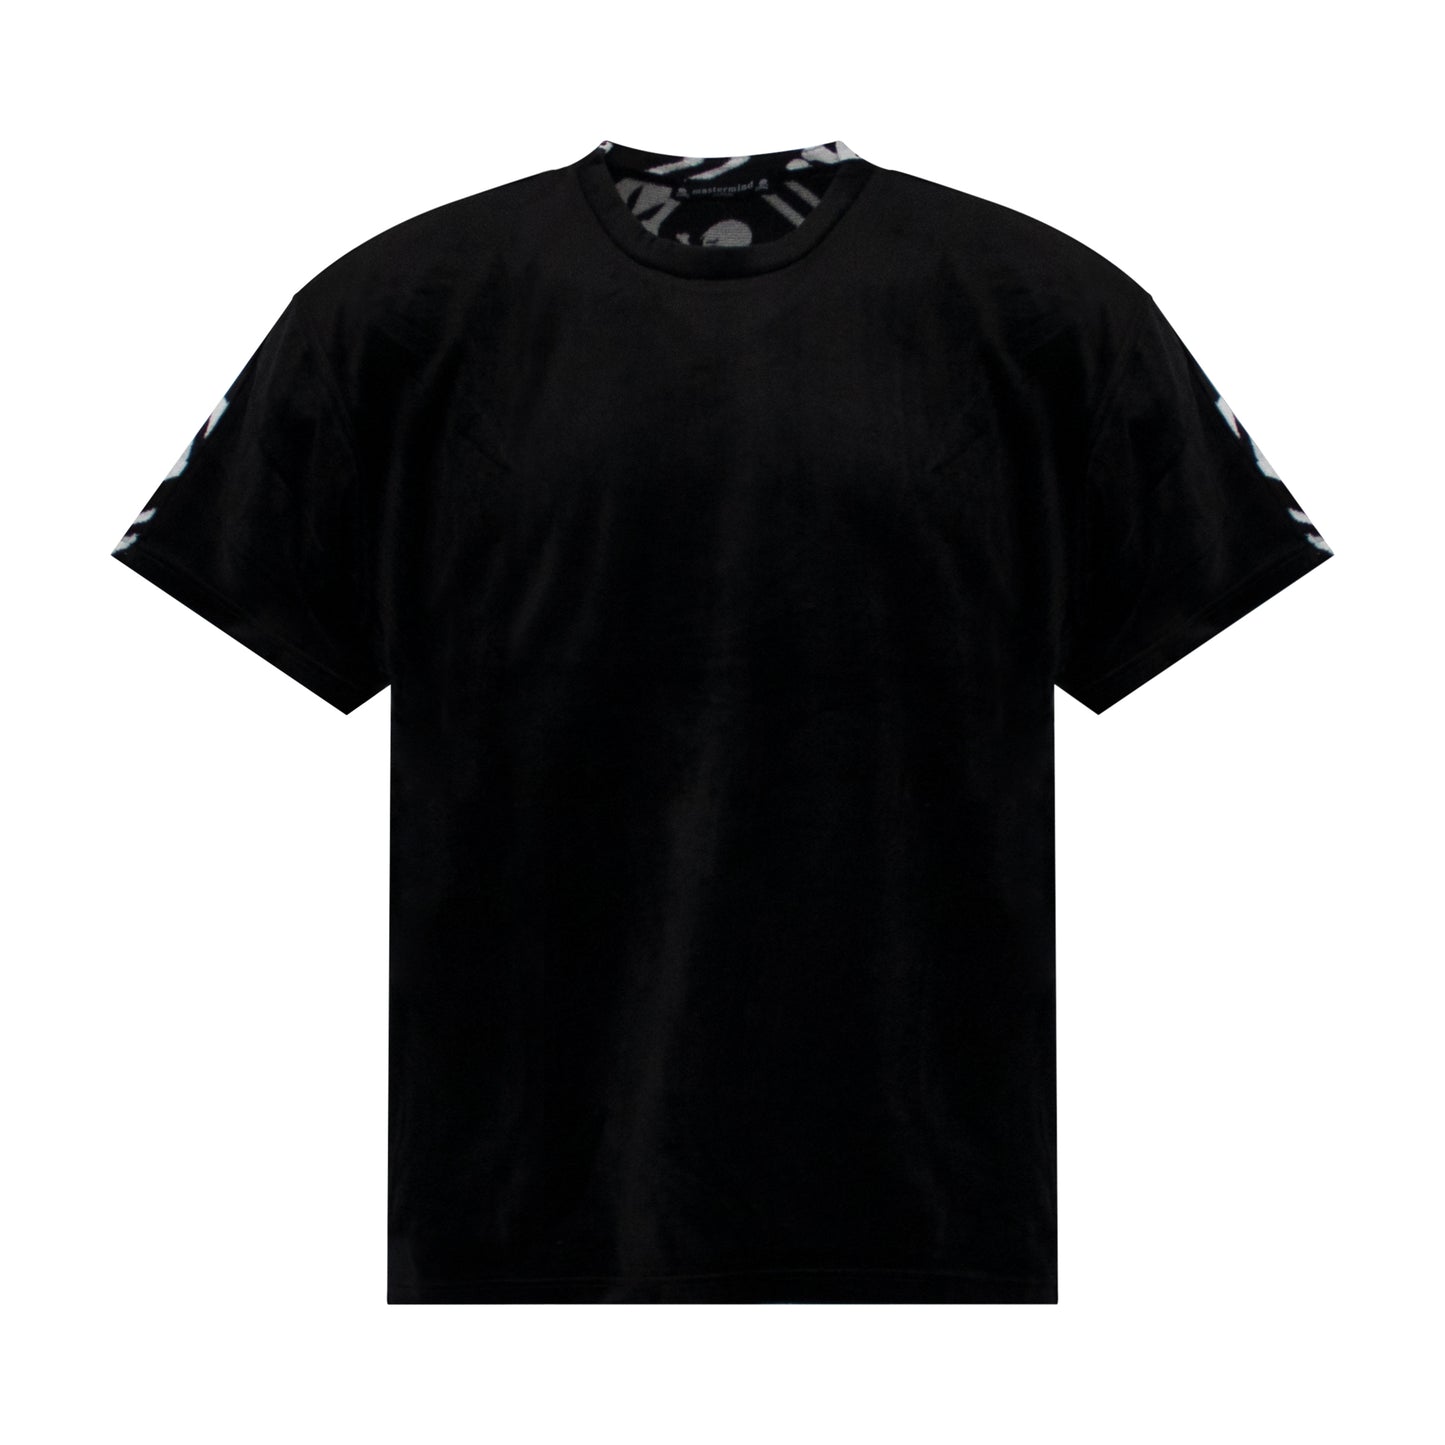 Mastermind Japan T-Shirt in Black/White